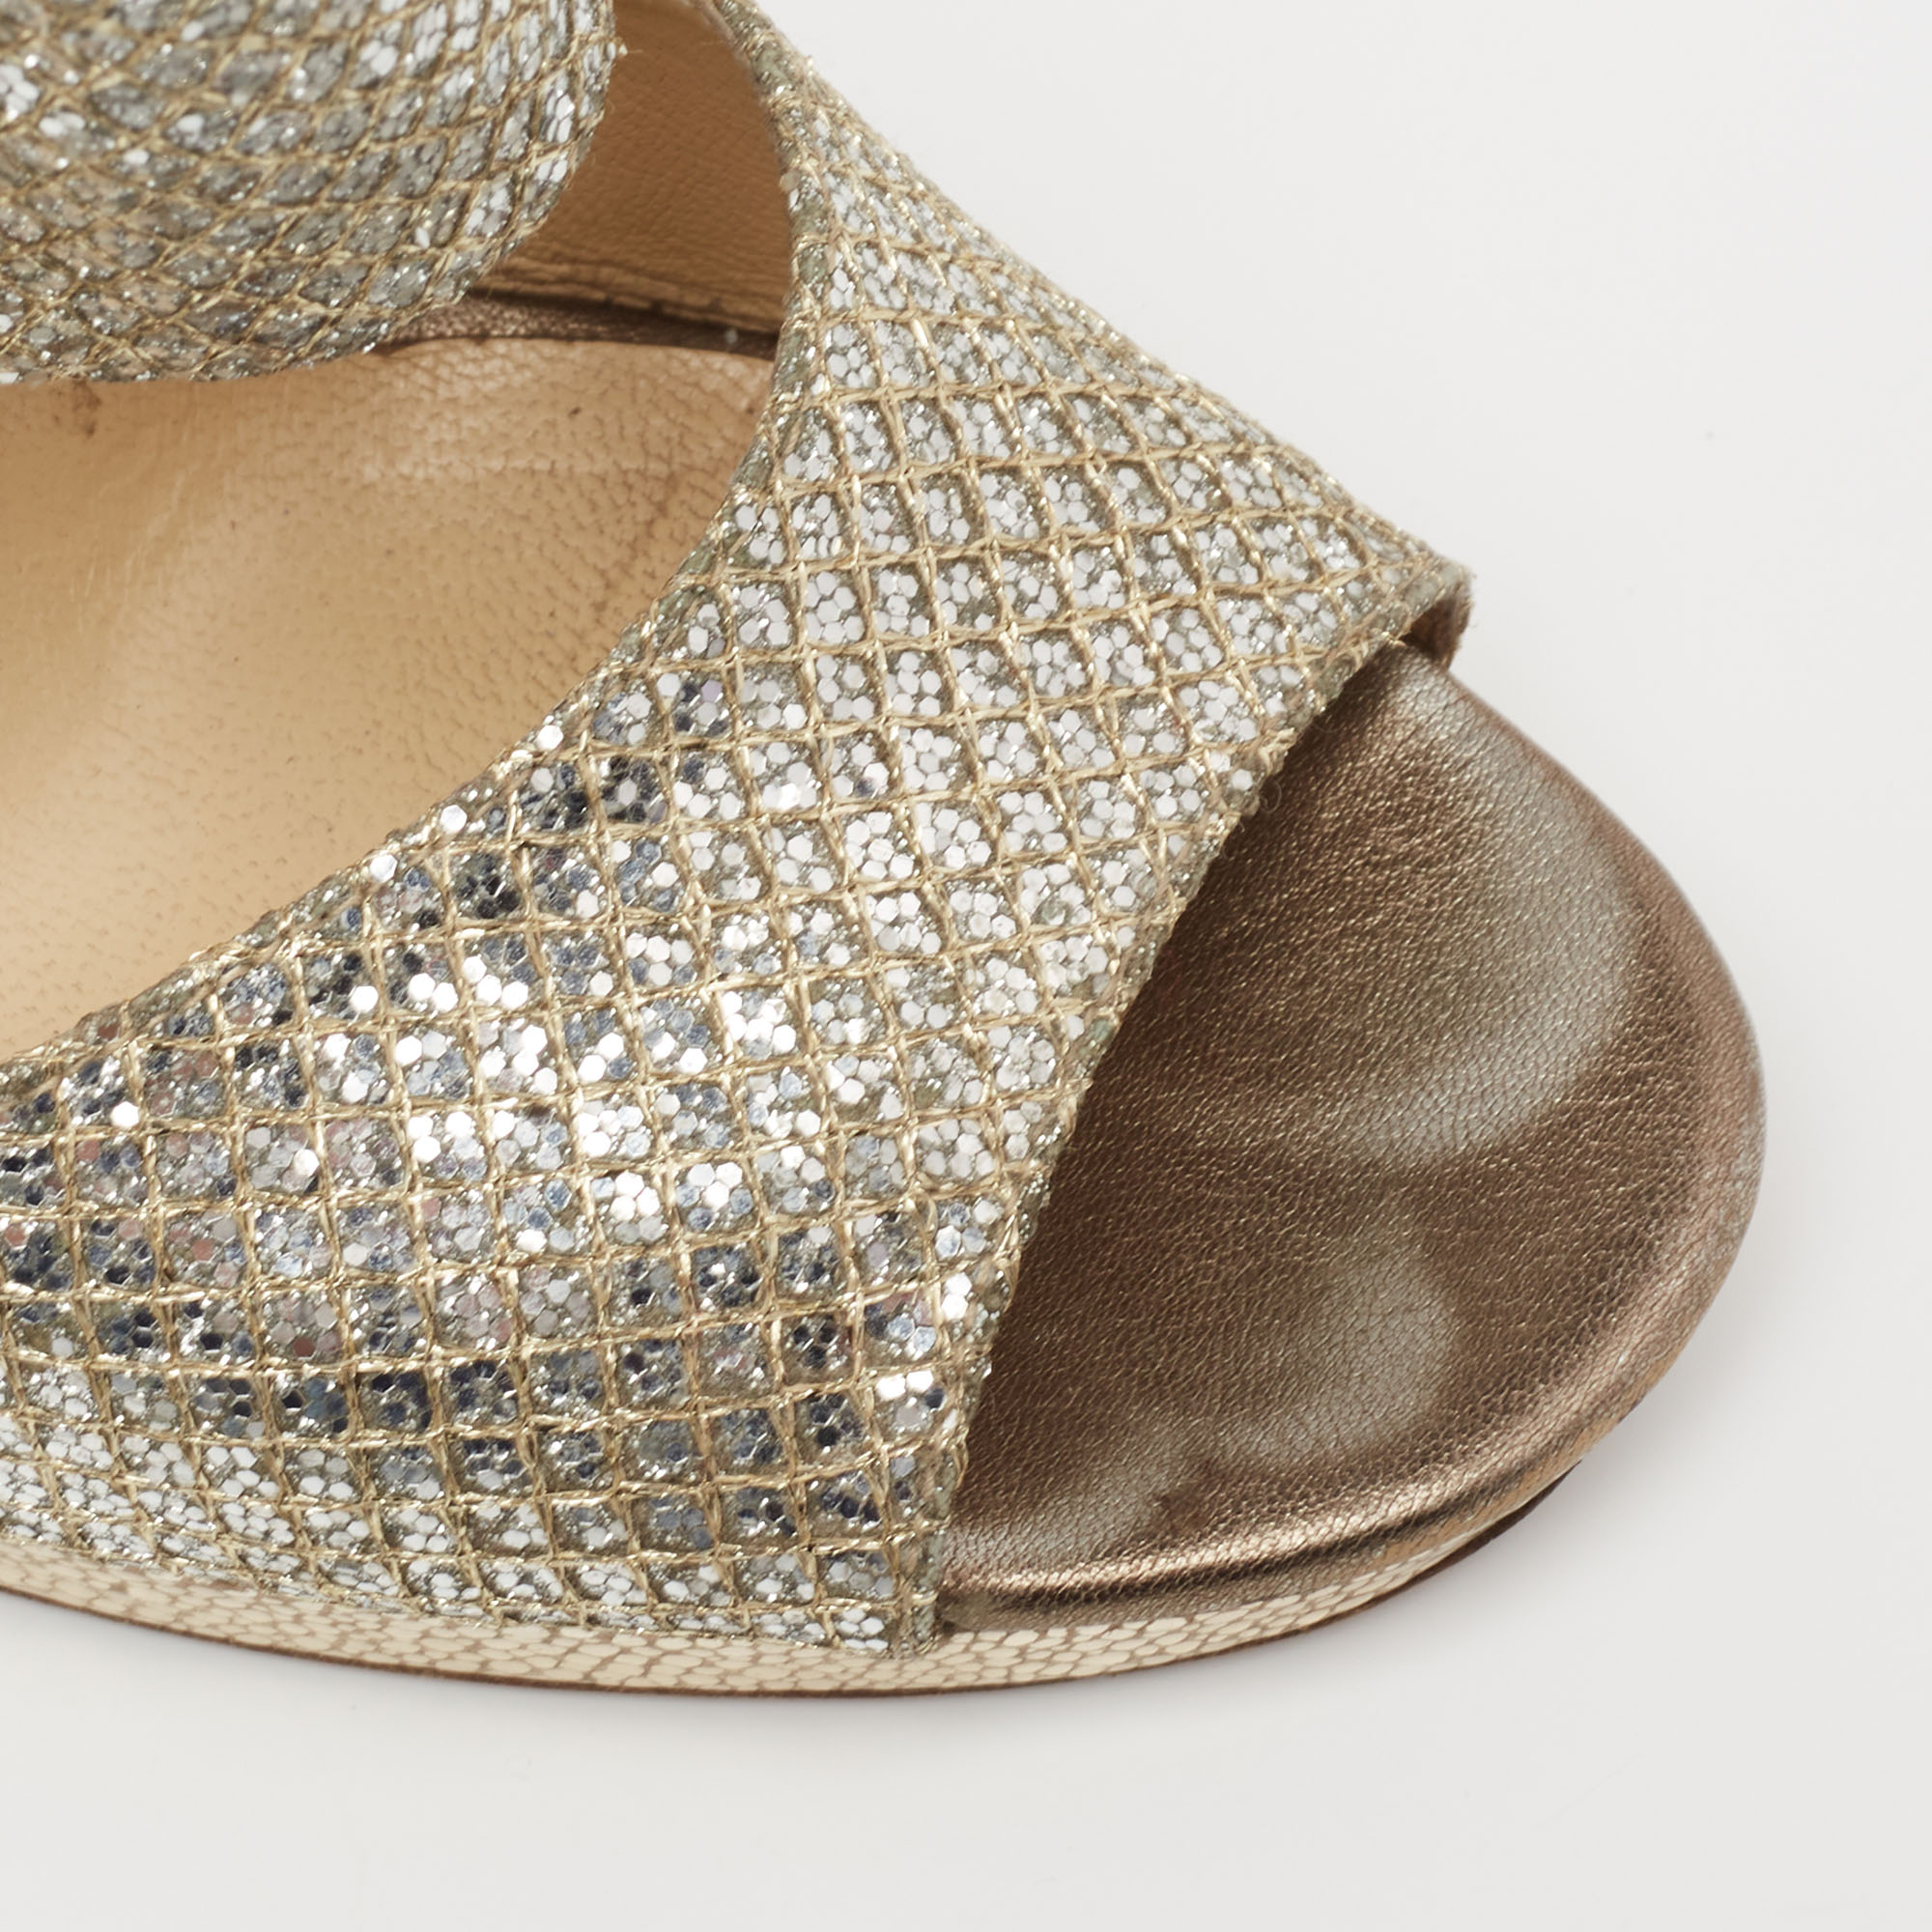 Jimmy Choo Silver/Gold Coarse Glitter Private Platform Sandals Size 37